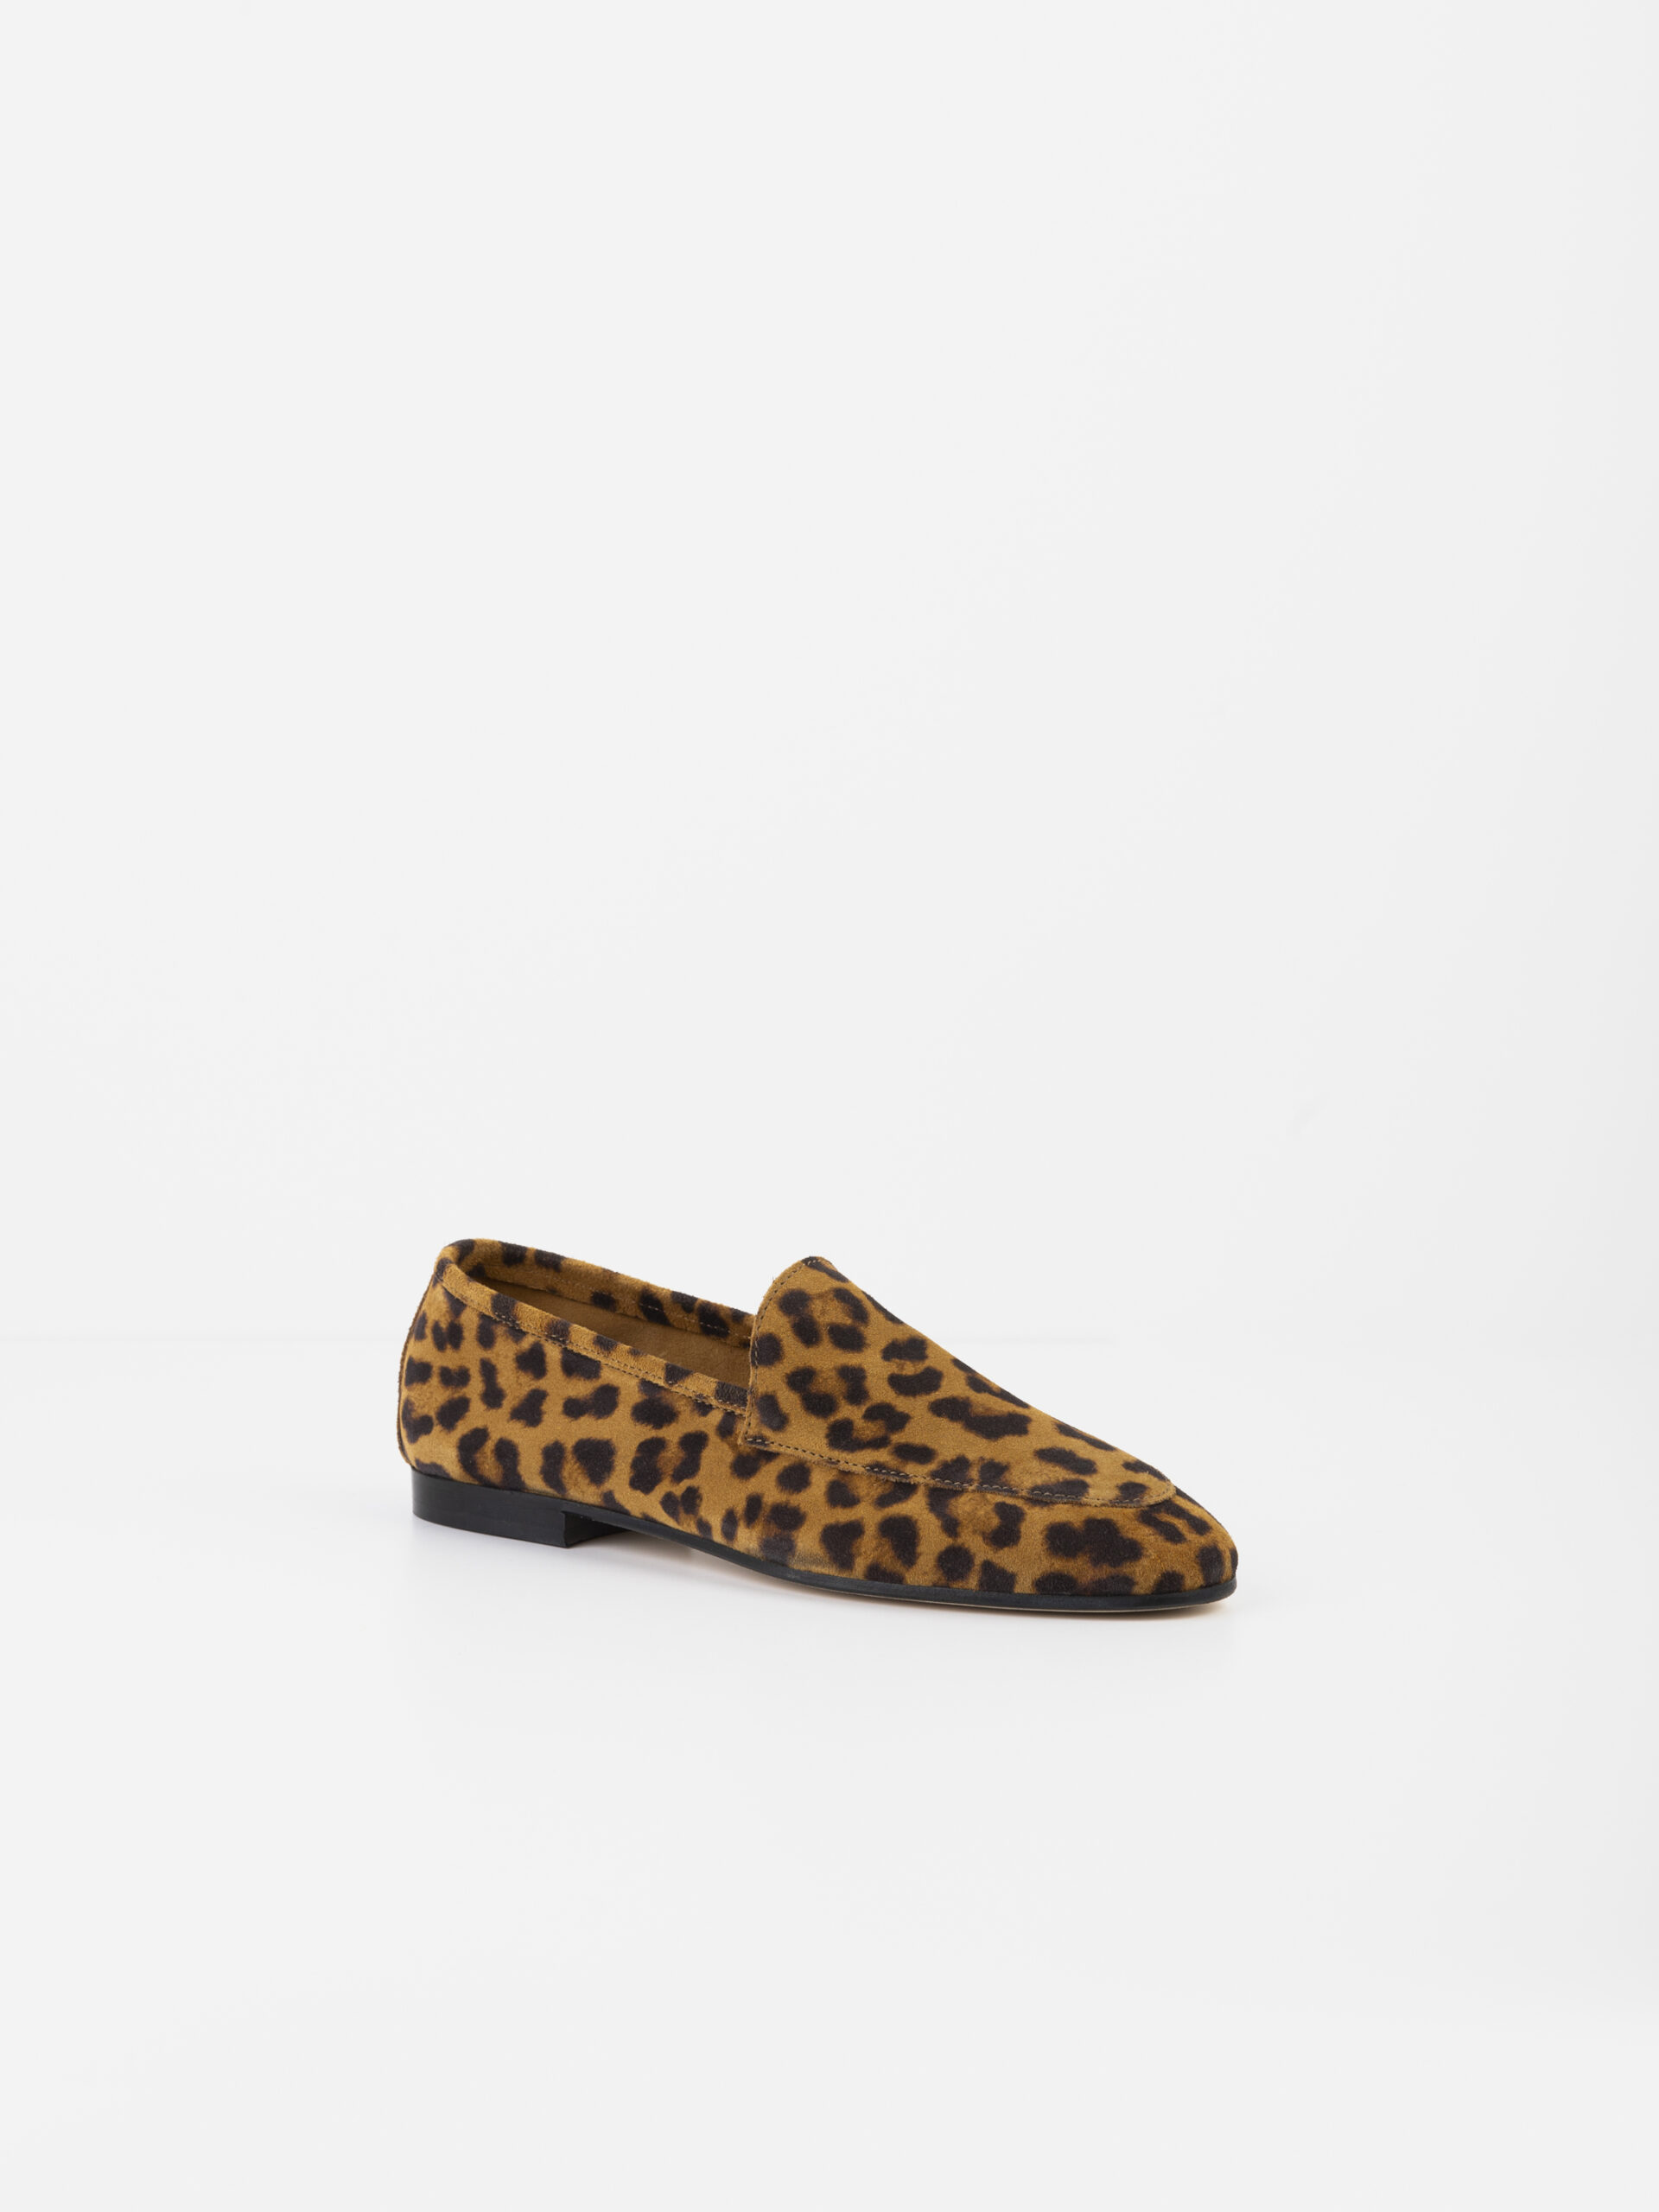 safa-loafers-leather-leopard-shoes-flats-anniel-handmade-matchboxathens